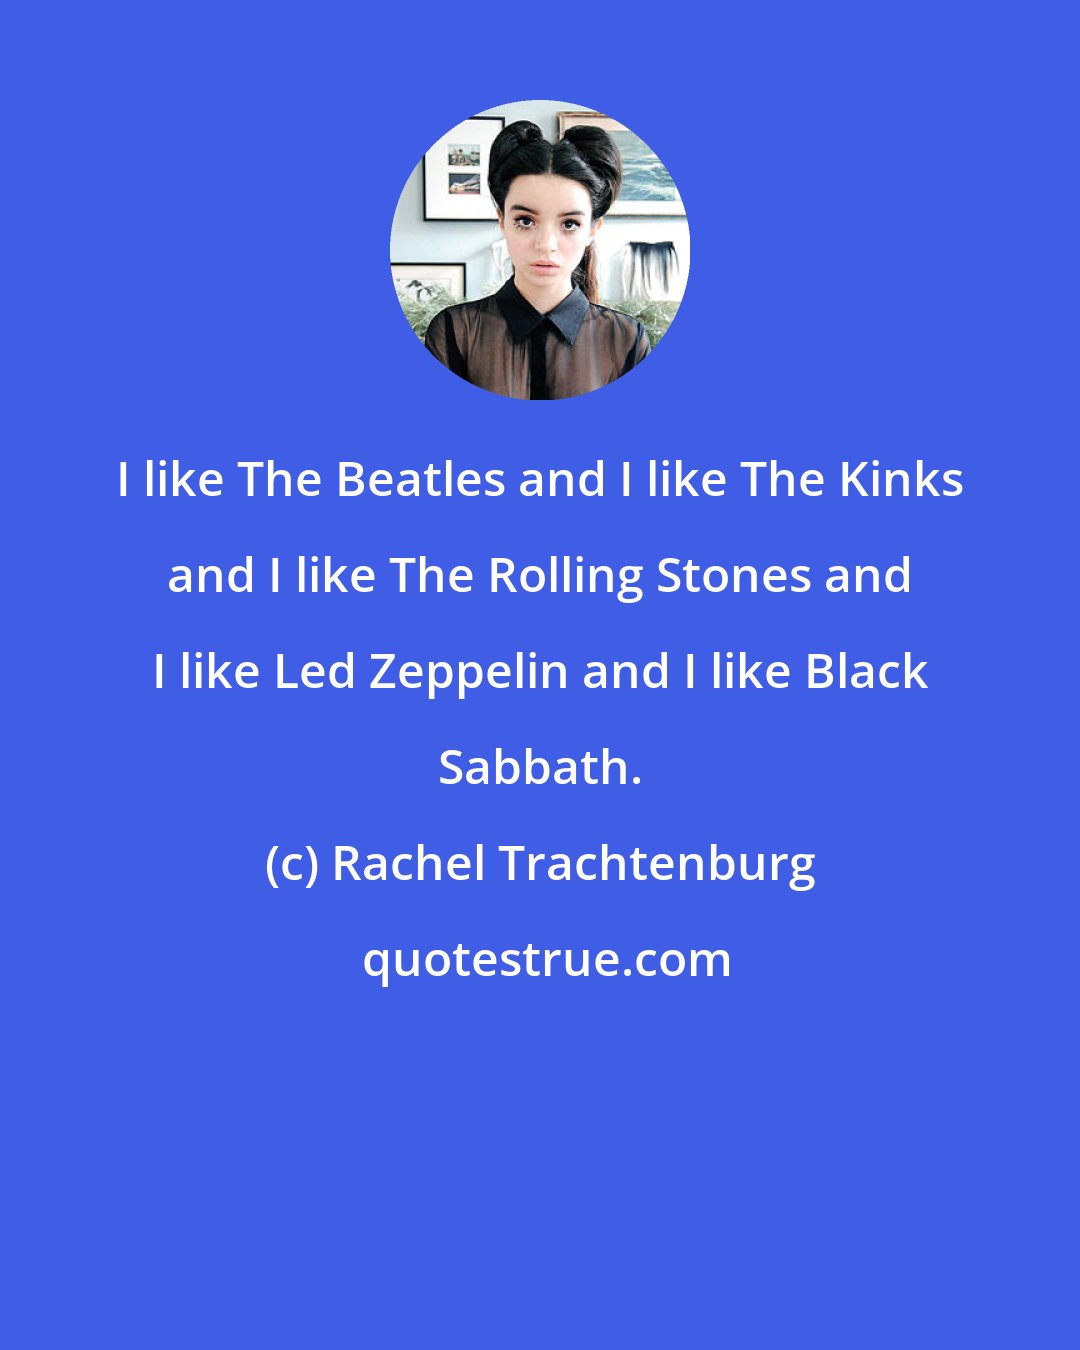 Rachel Trachtenburg: I like The Beatles and I like The Kinks and I like The Rolling Stones and I like Led Zeppelin and I like Black Sabbath.